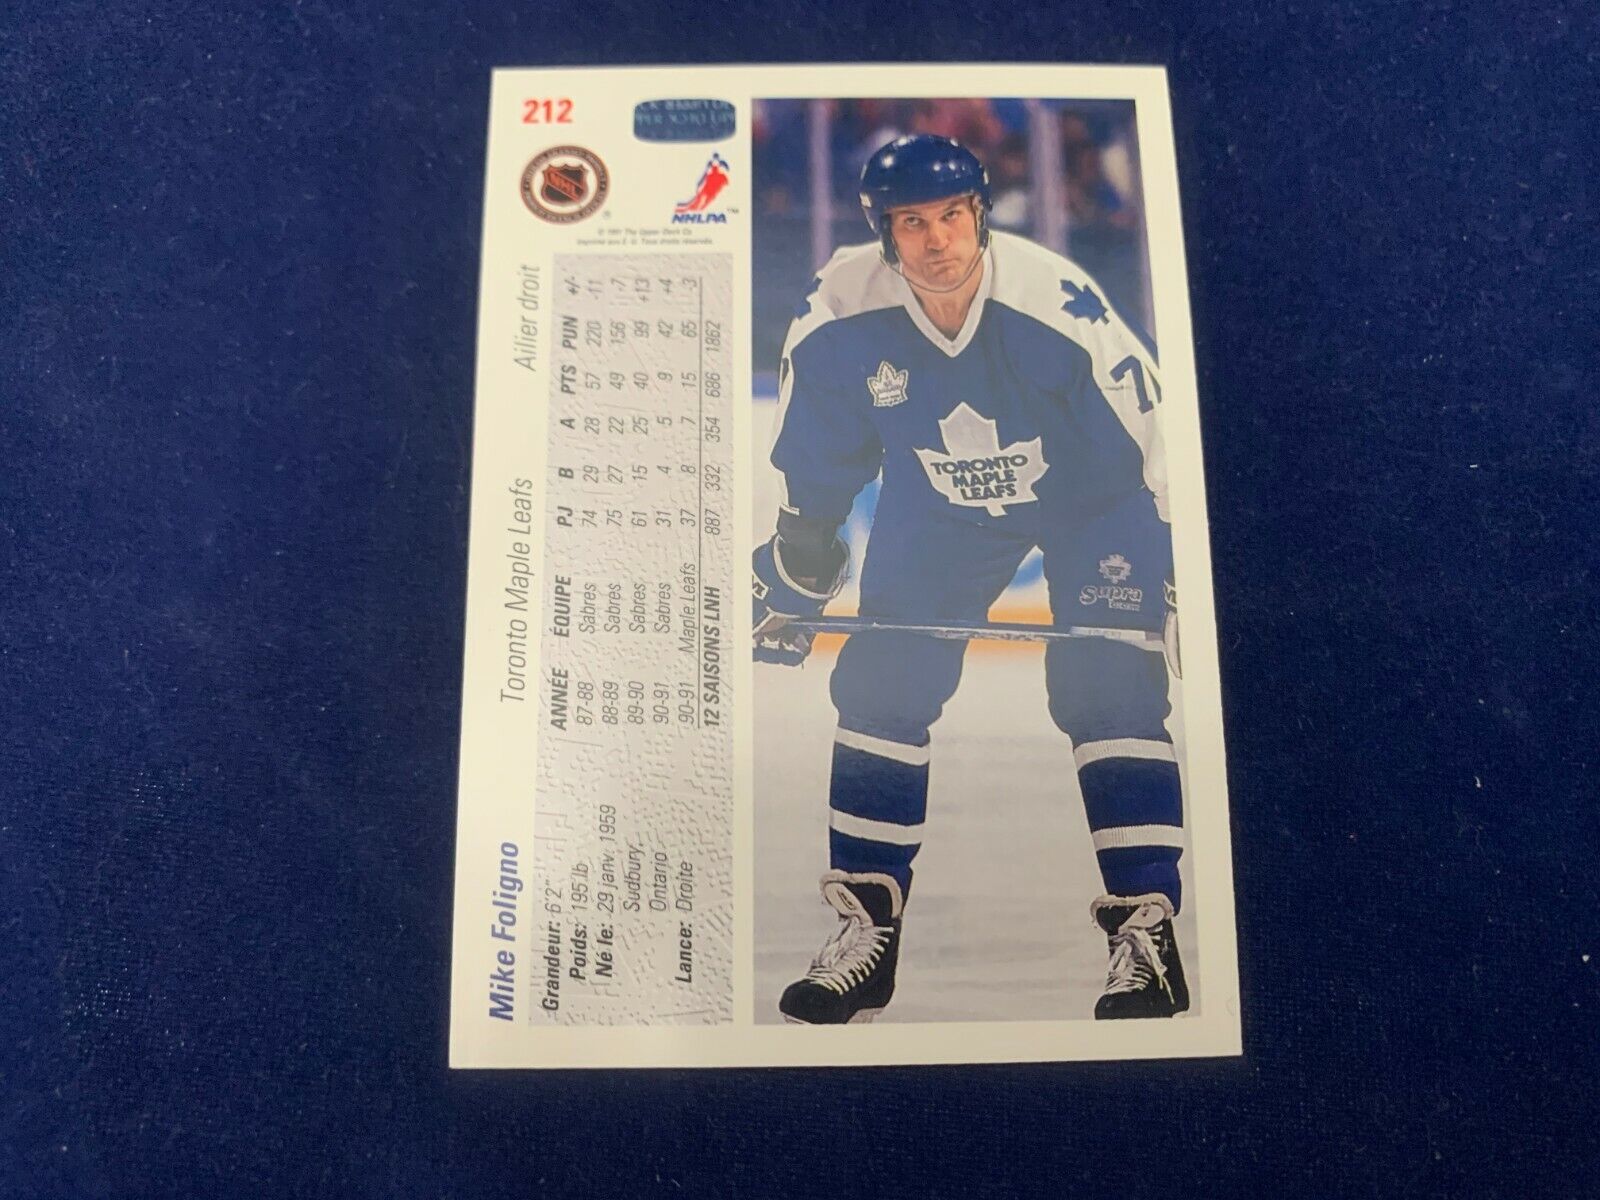 Mike Foligno Toronto Leafs Hand Signed 1991 Upper Deck Hockey Card 212 NM CardB